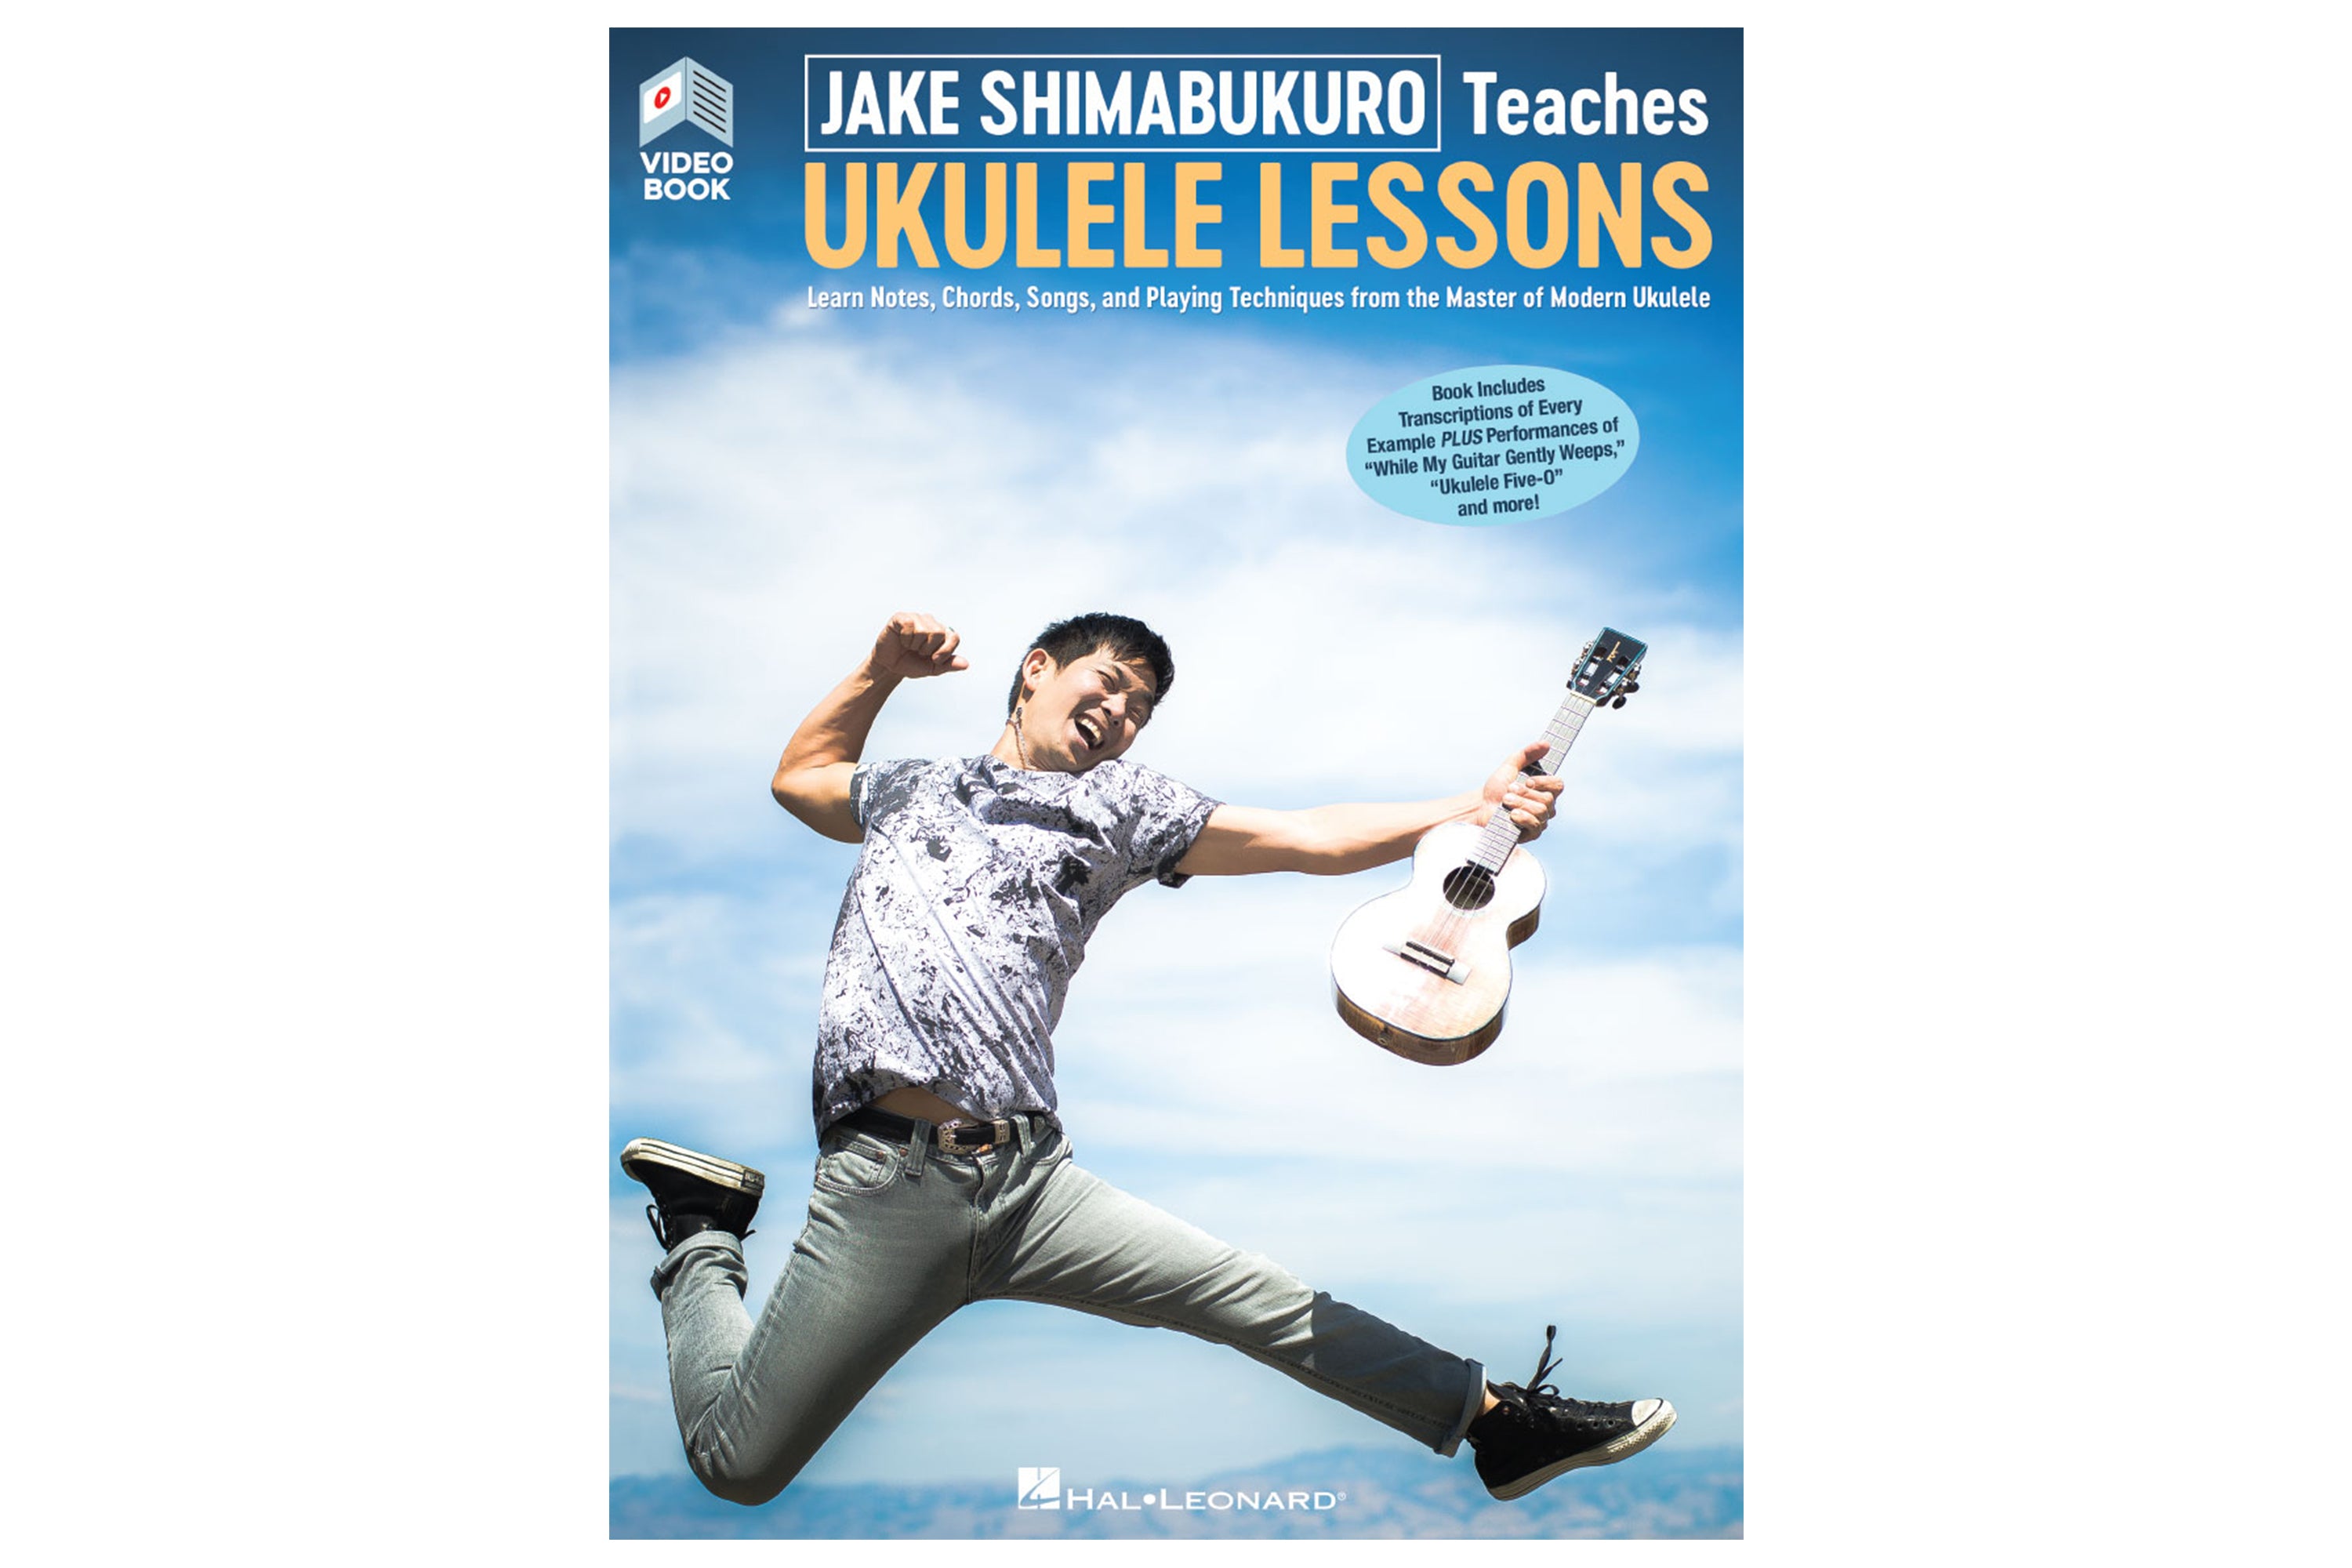 Jake Shimabukuro Teaches Ukulele Lessons Book with Full-Length Online Videos